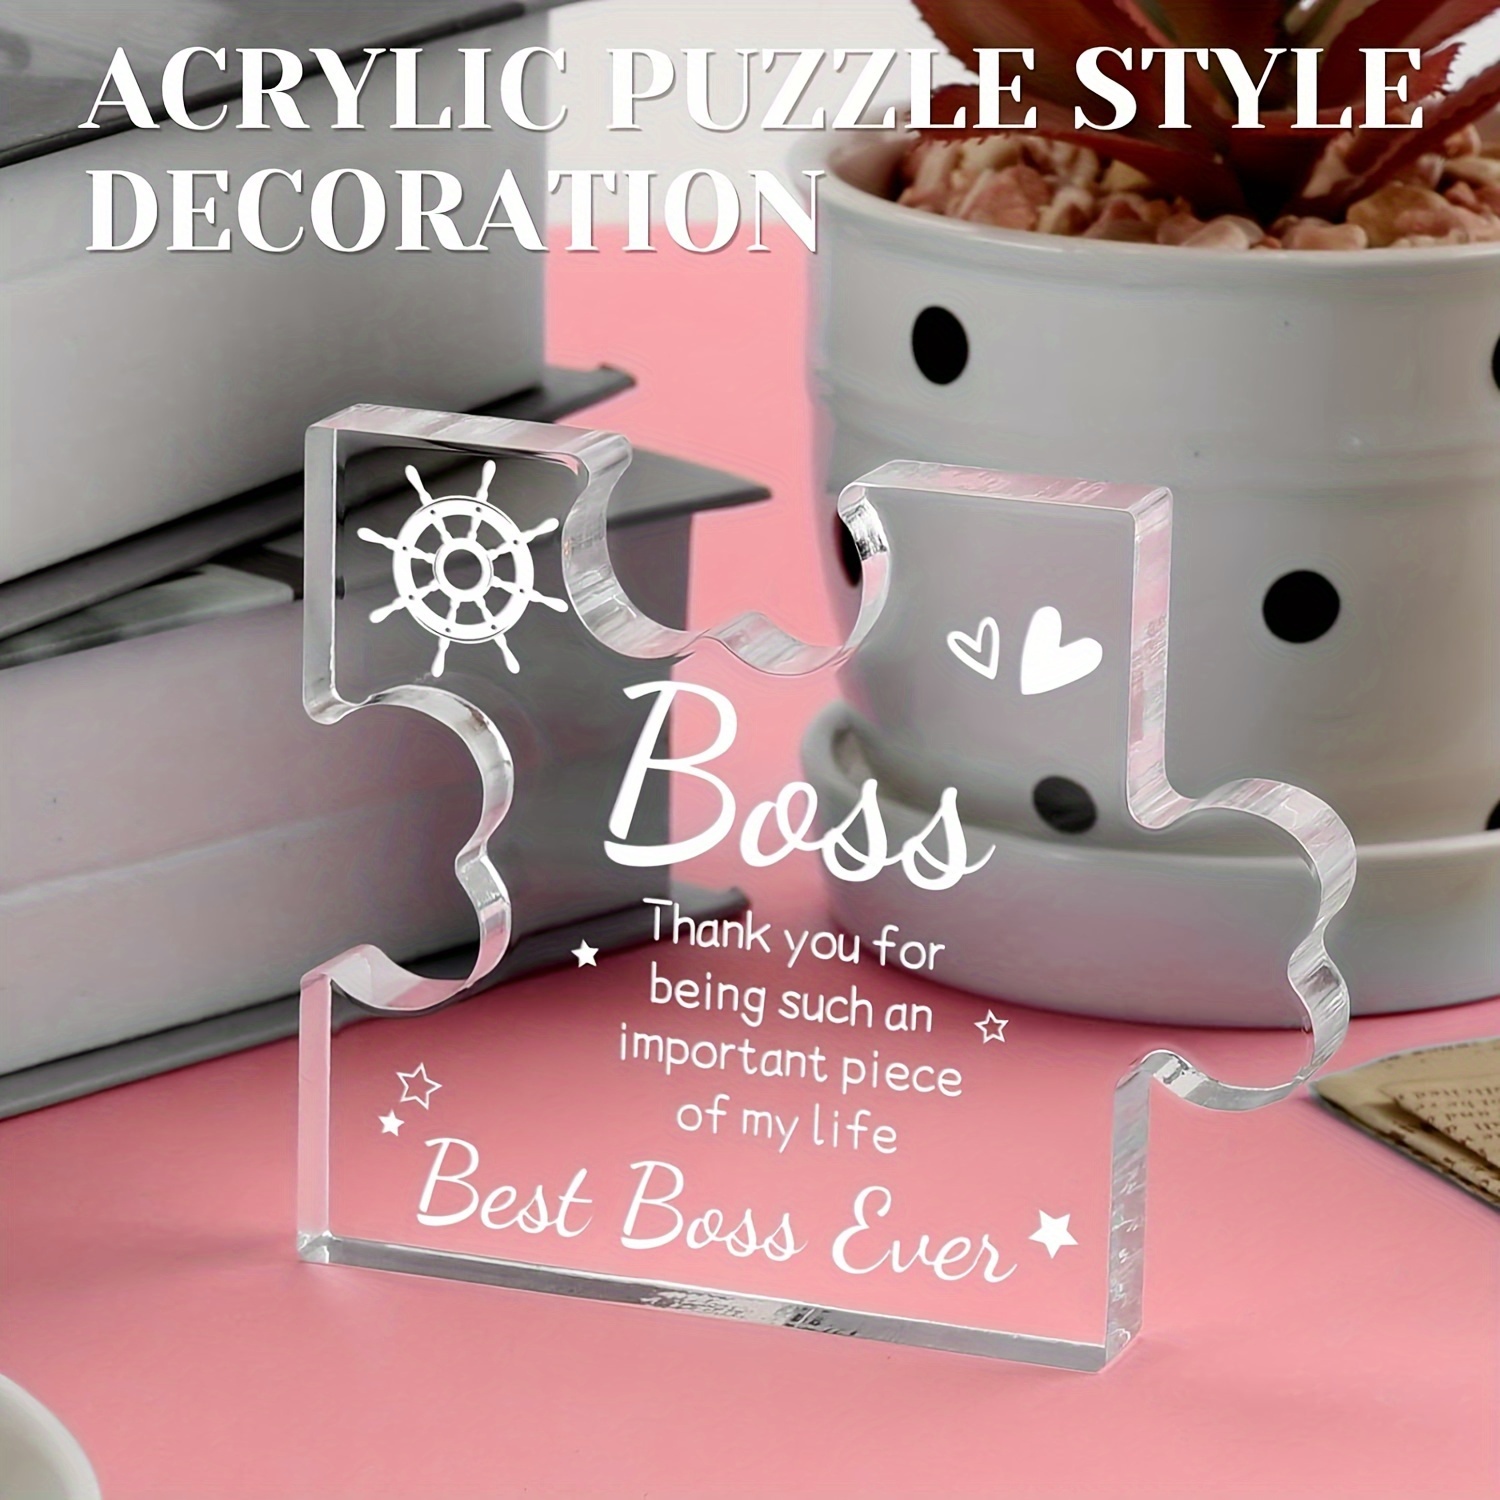 Inspirational Gifts for Women Men, Cute Office Desk Accessories for Women-  Office Decorations for Work- Gifts for Boss, Boss Lady Women Friend